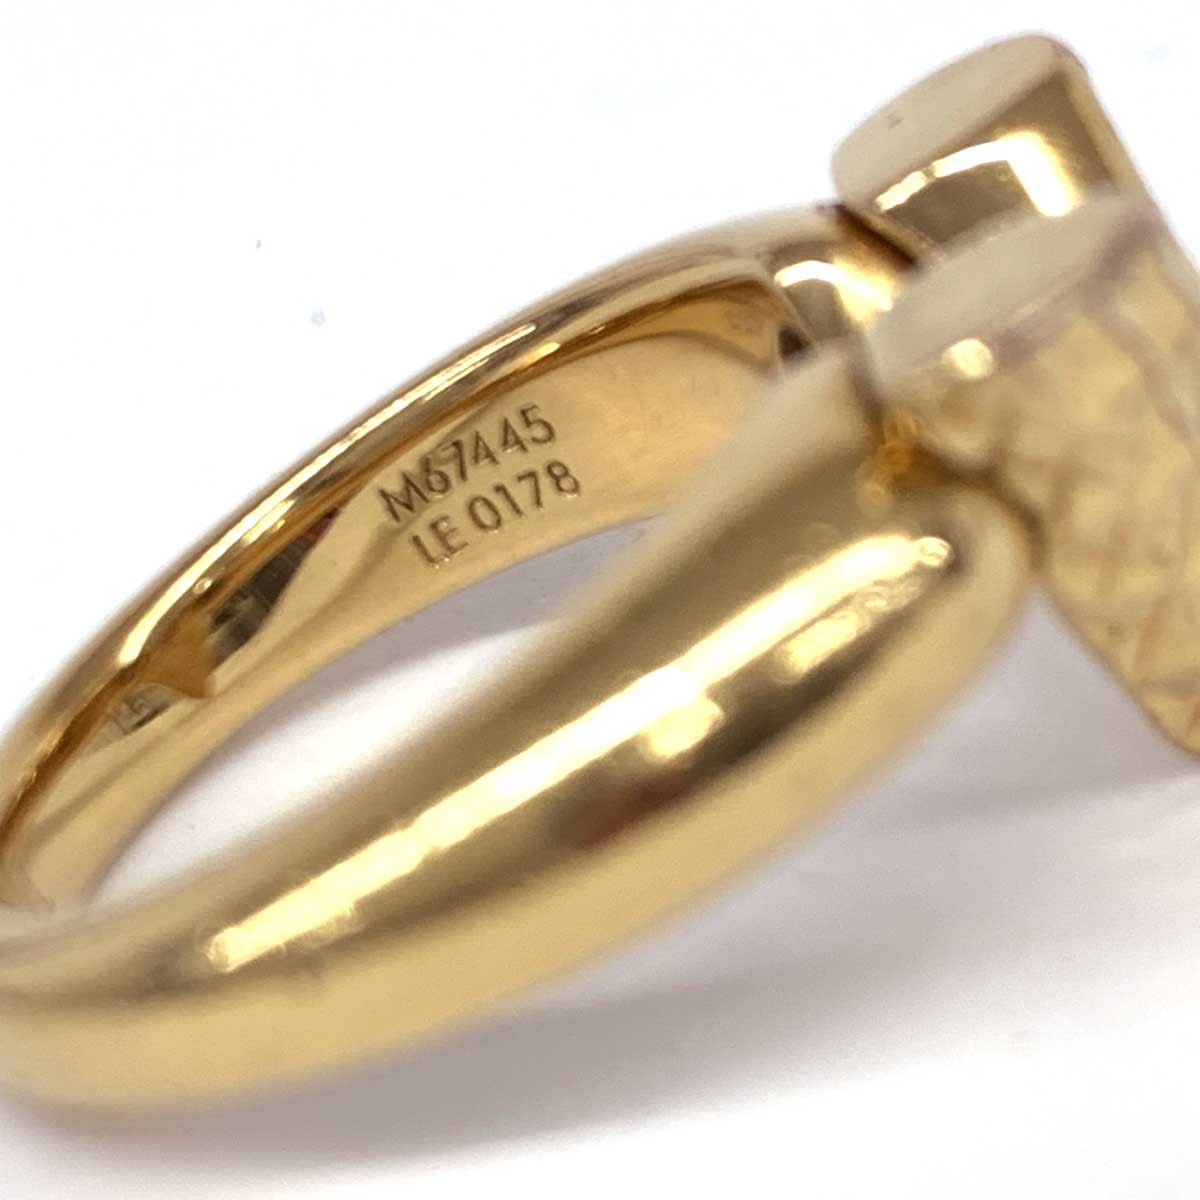 *LOUIS VUITTON Louis Vuitton Esse n car ru ring LS size *M67445 LE0178 Gold color lady's ring accessory accessory 